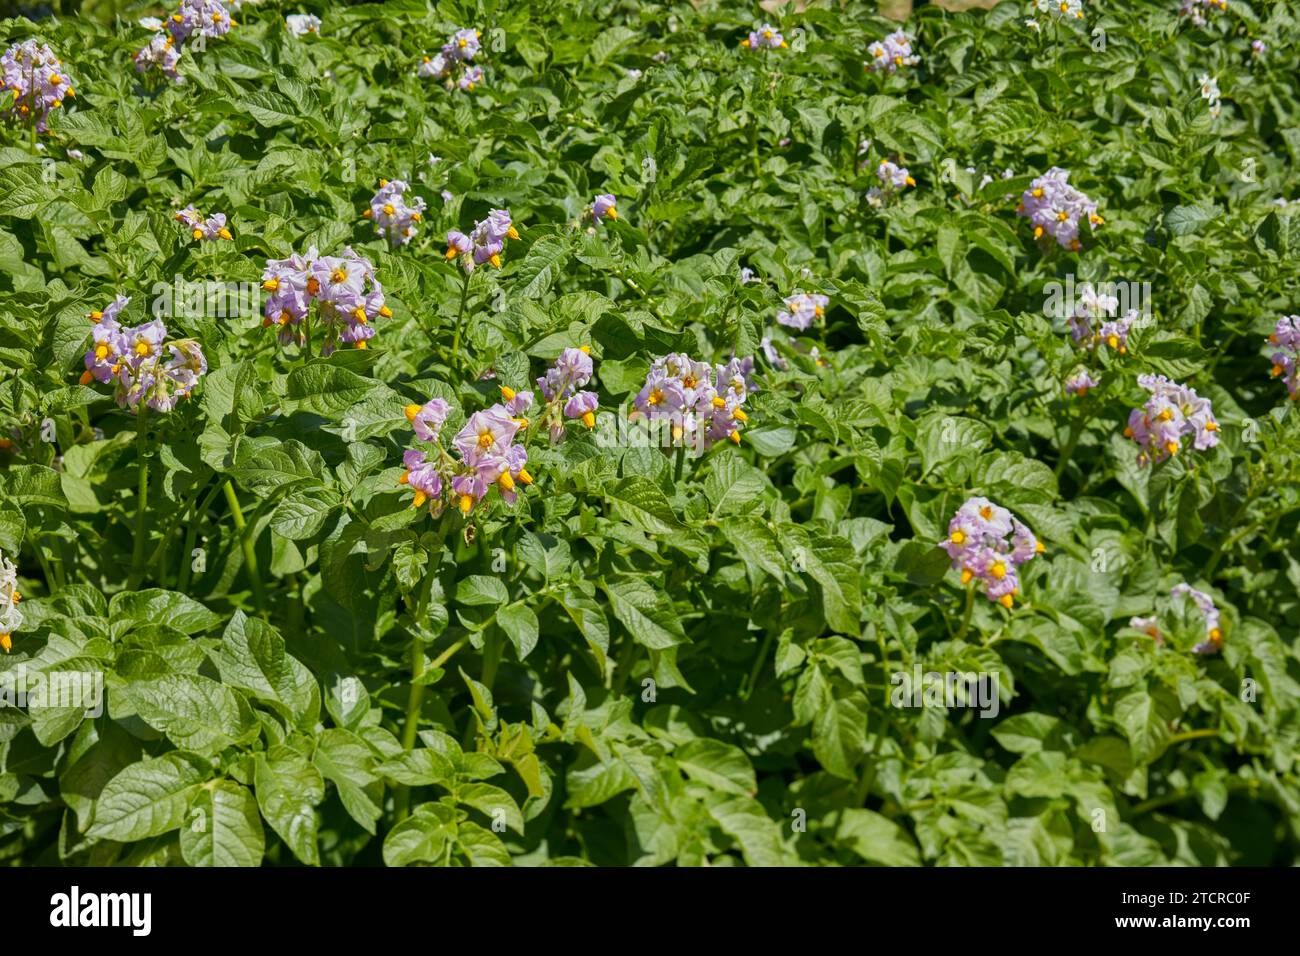 Growing potato plants (Solanum tuberosum) in flower. Stock Photo